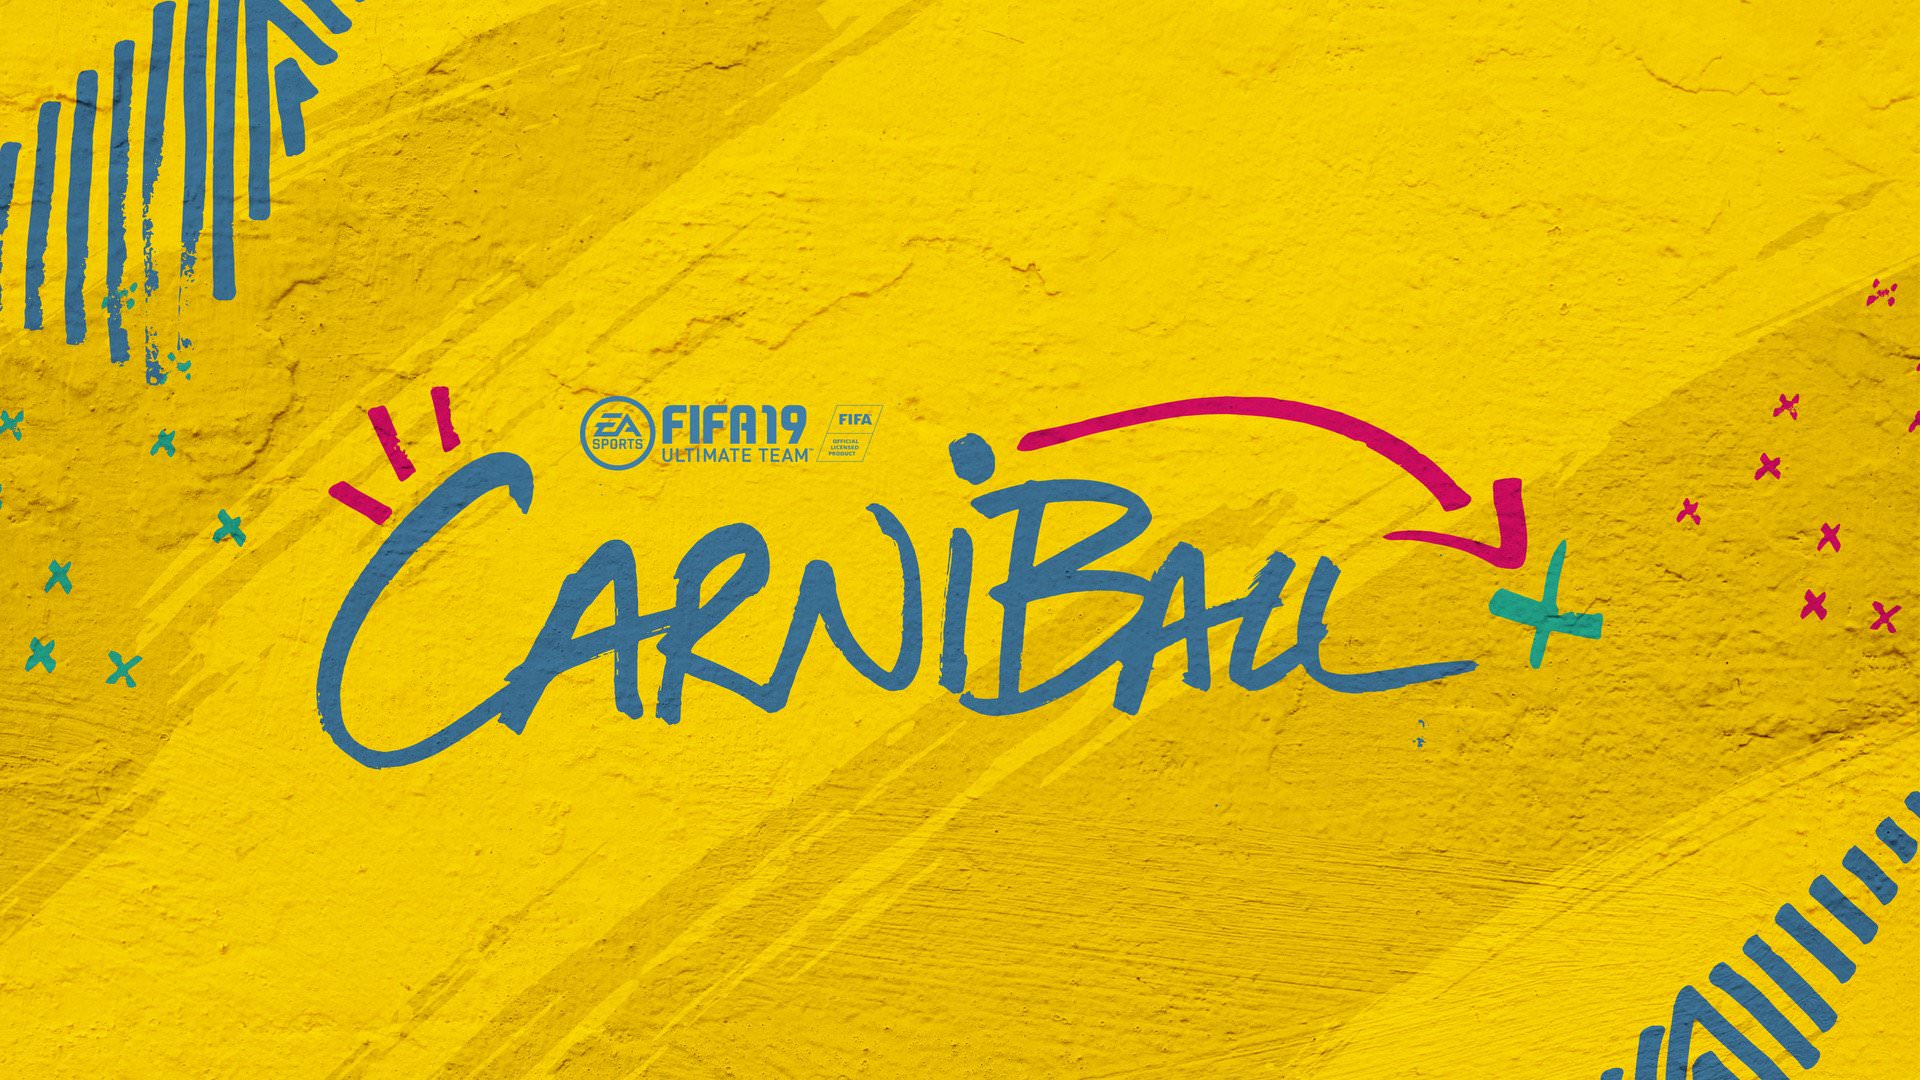 FIFA 19 Carniball